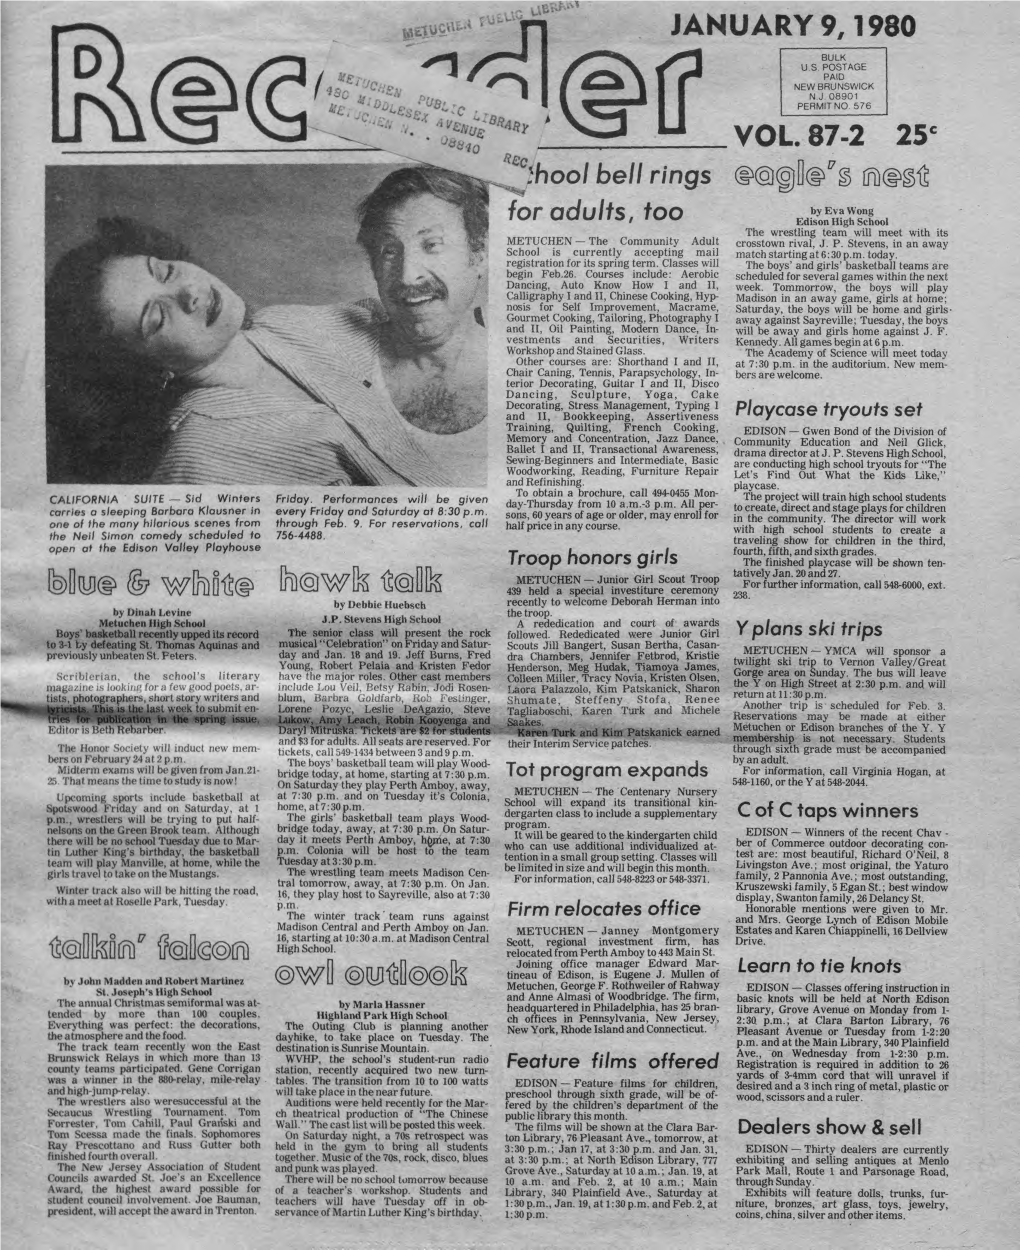 January 9, 1980 Vol. 87-2